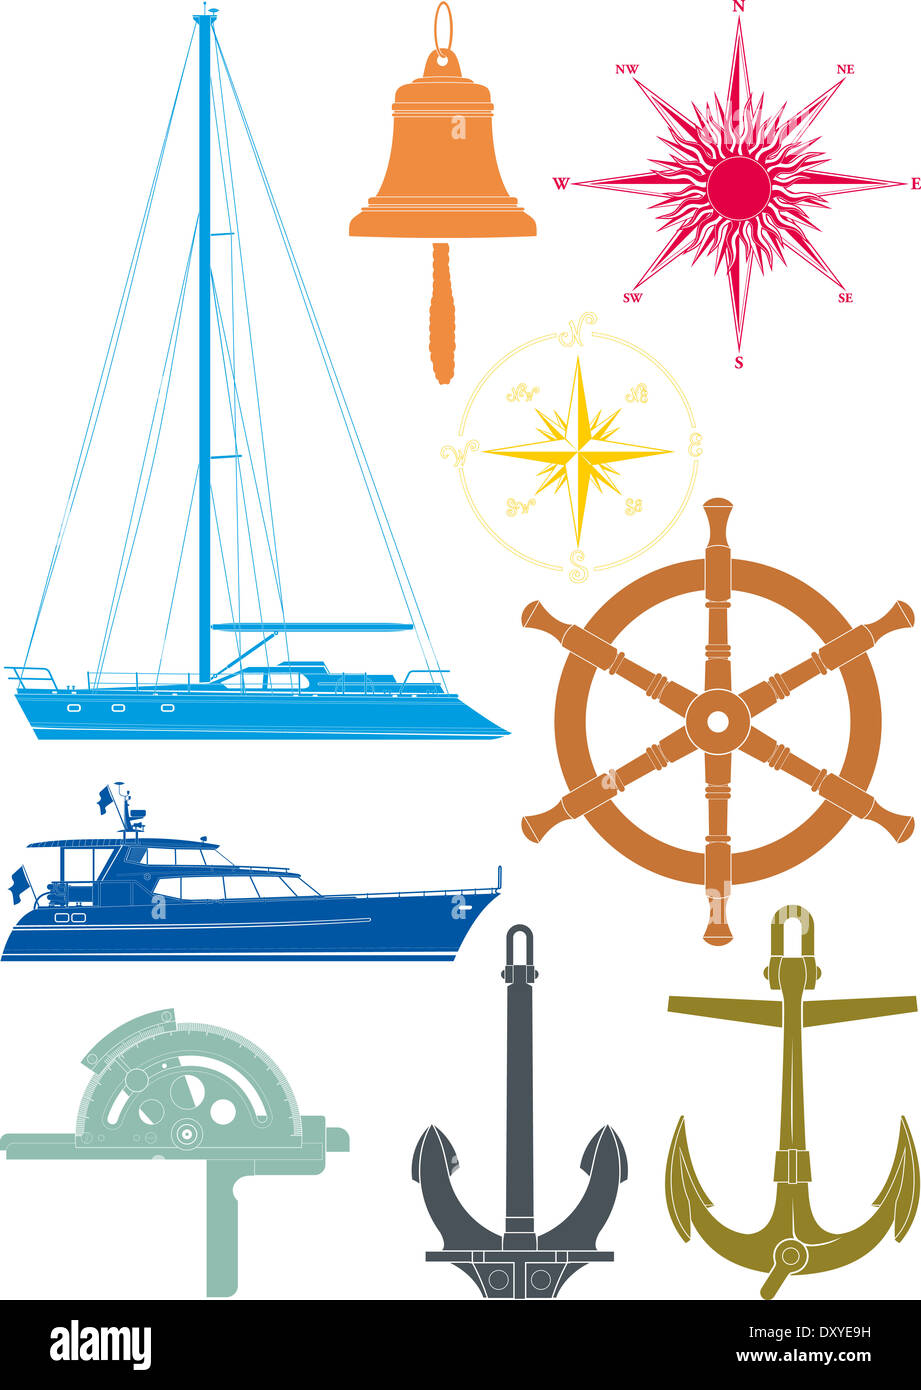 marine and yachting symbols Stock Photo